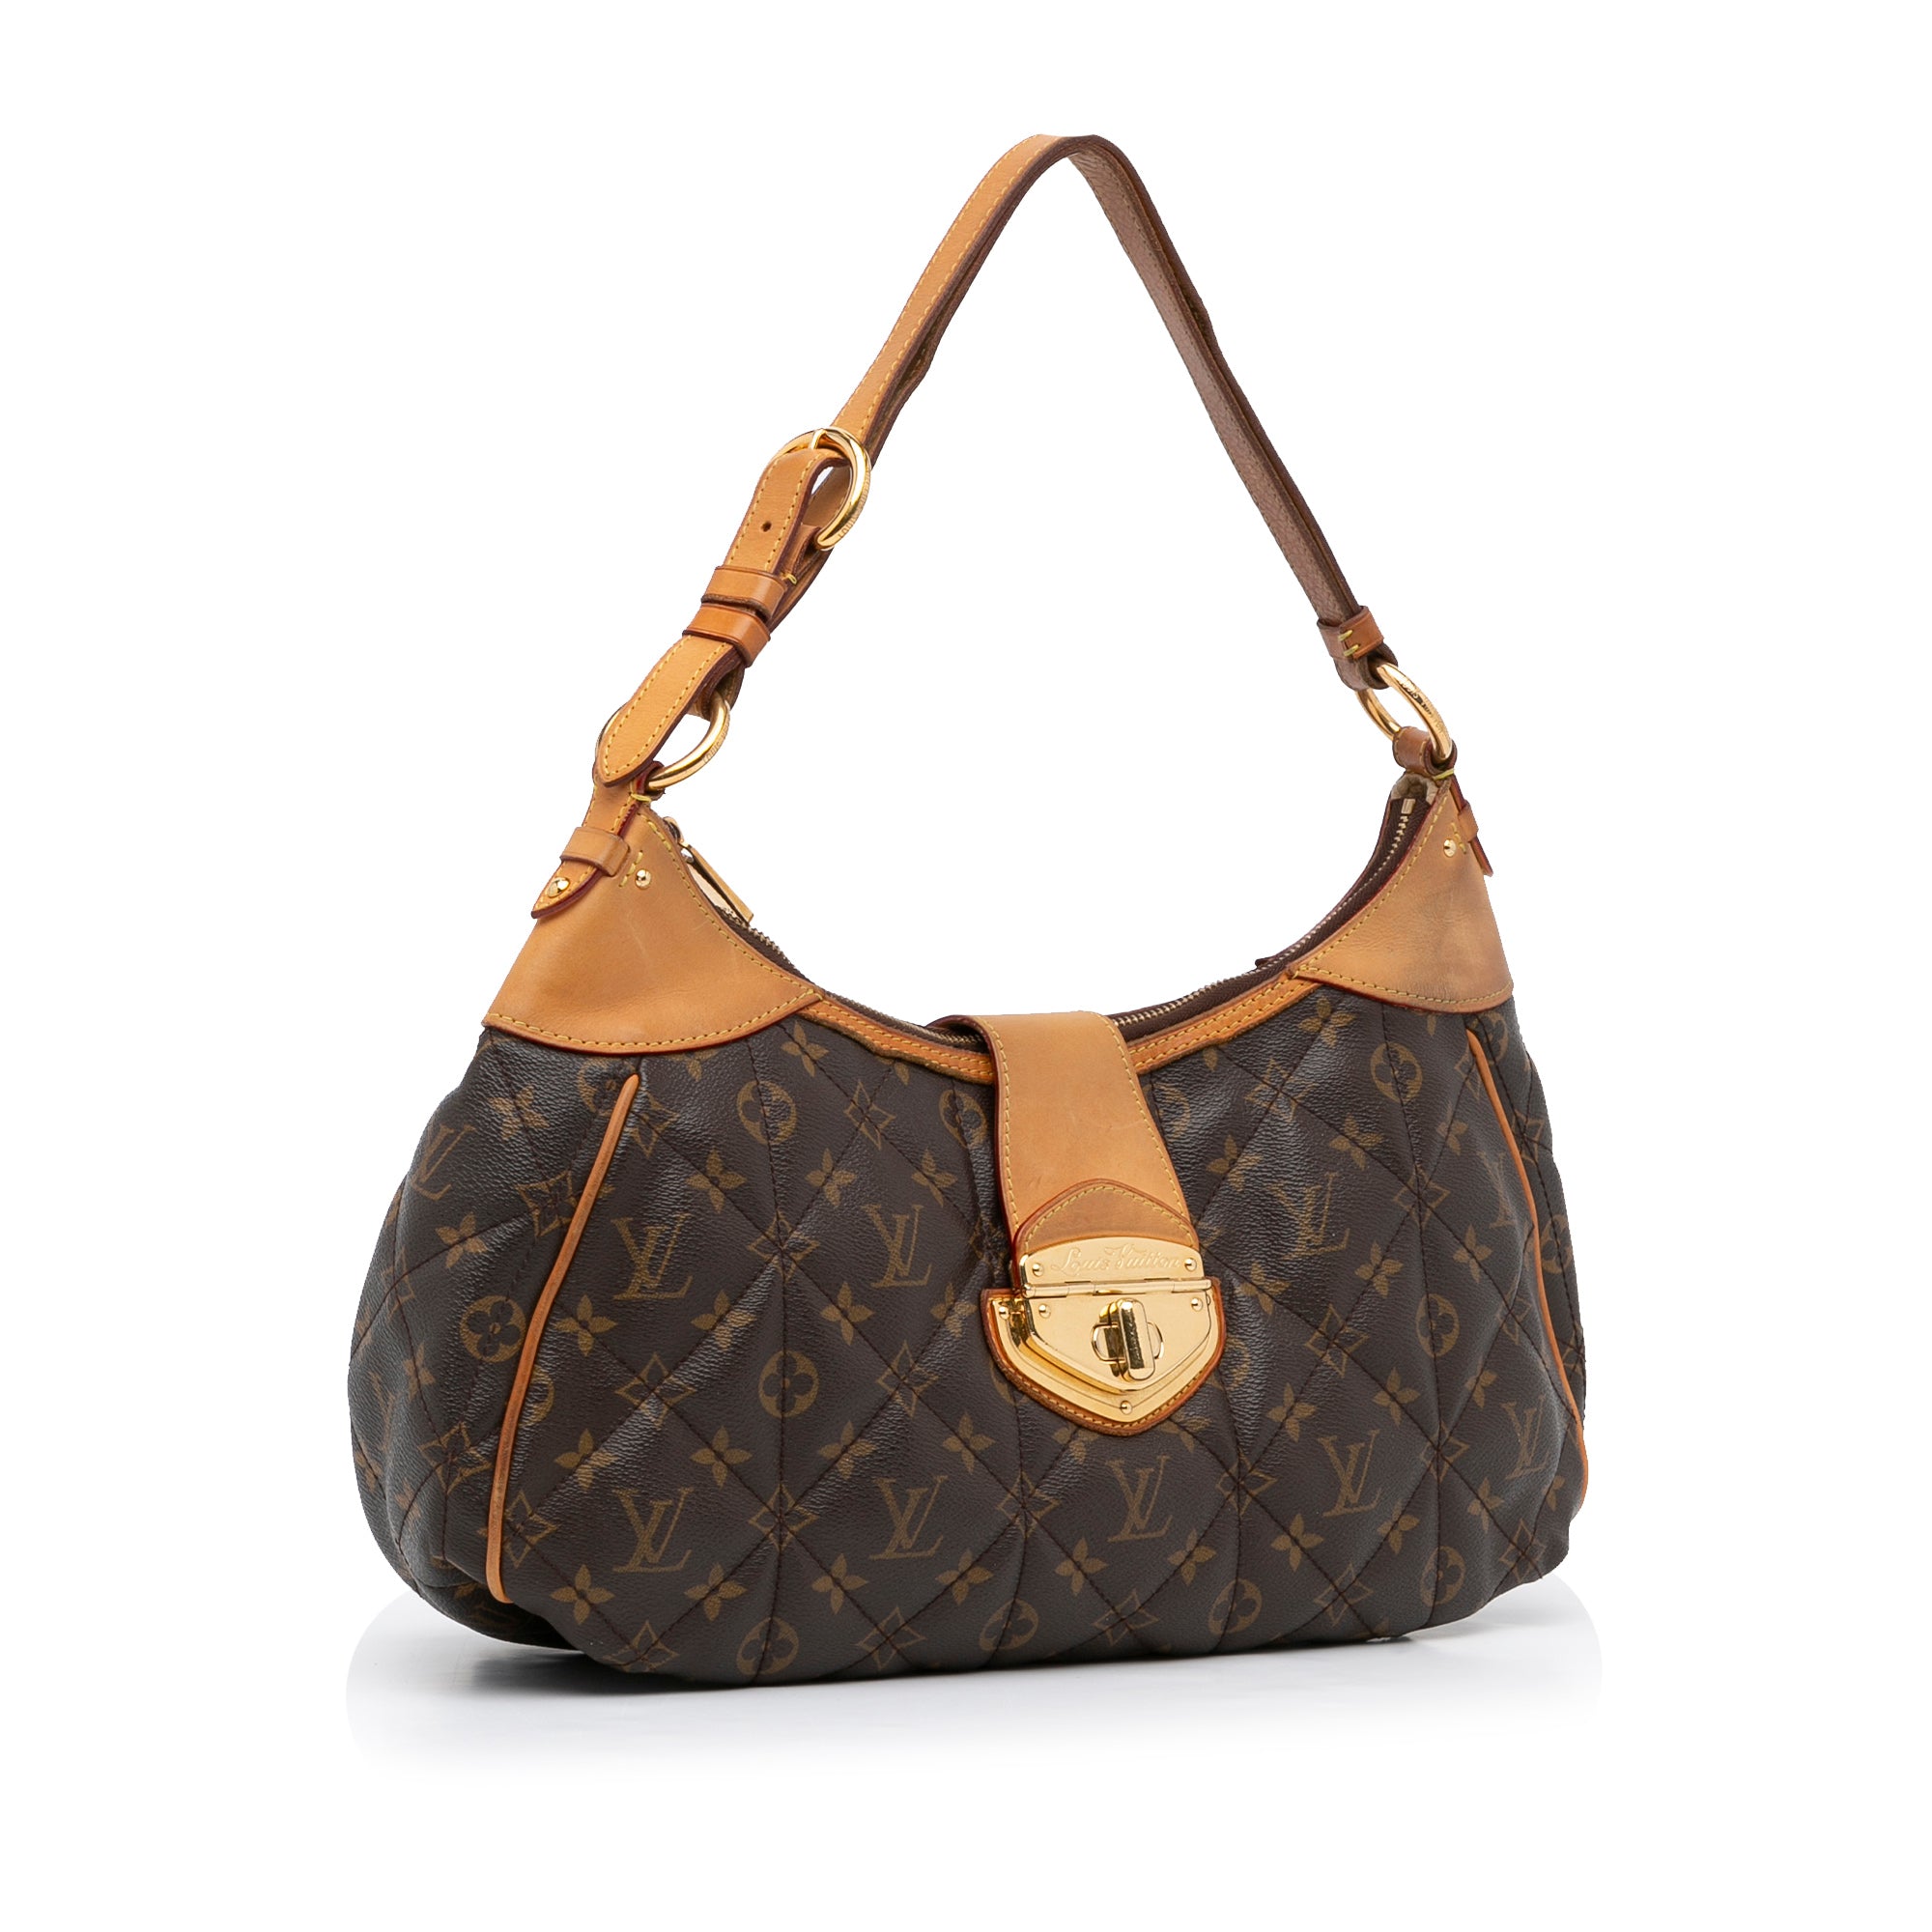 Etoile shopper leather handbag Louis Vuitton Brown in Leather - 35971682